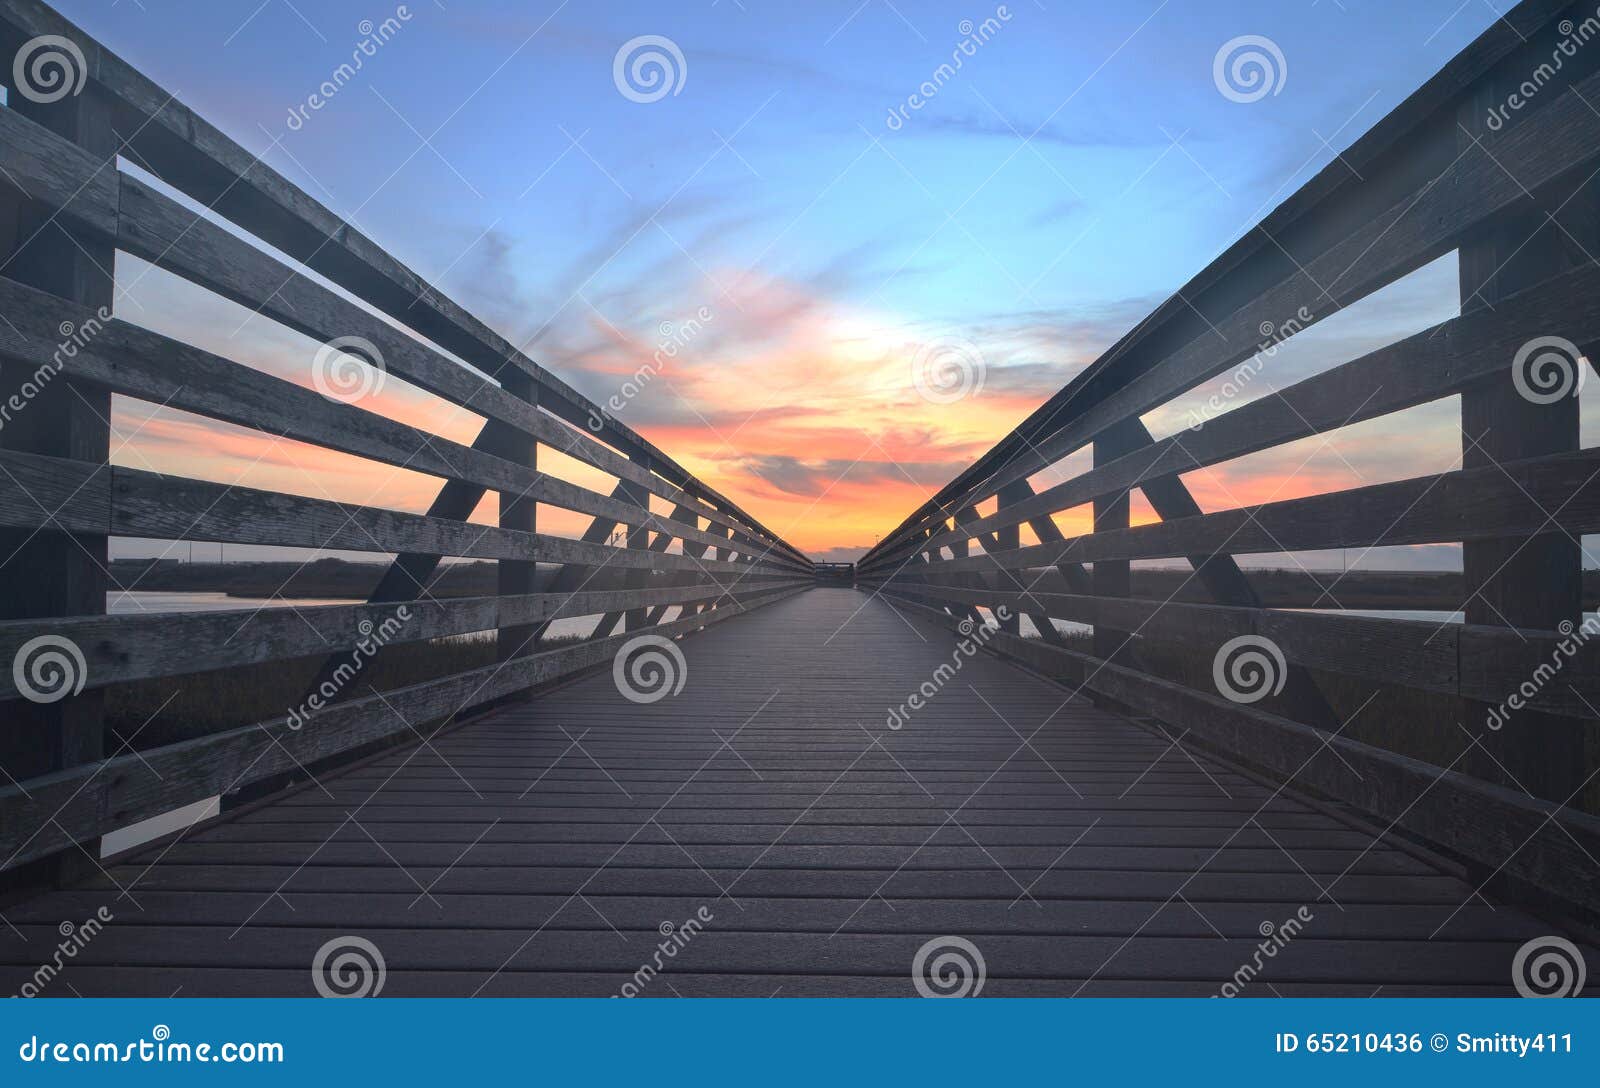 wooden boardwalk at sunset at bolsa chica